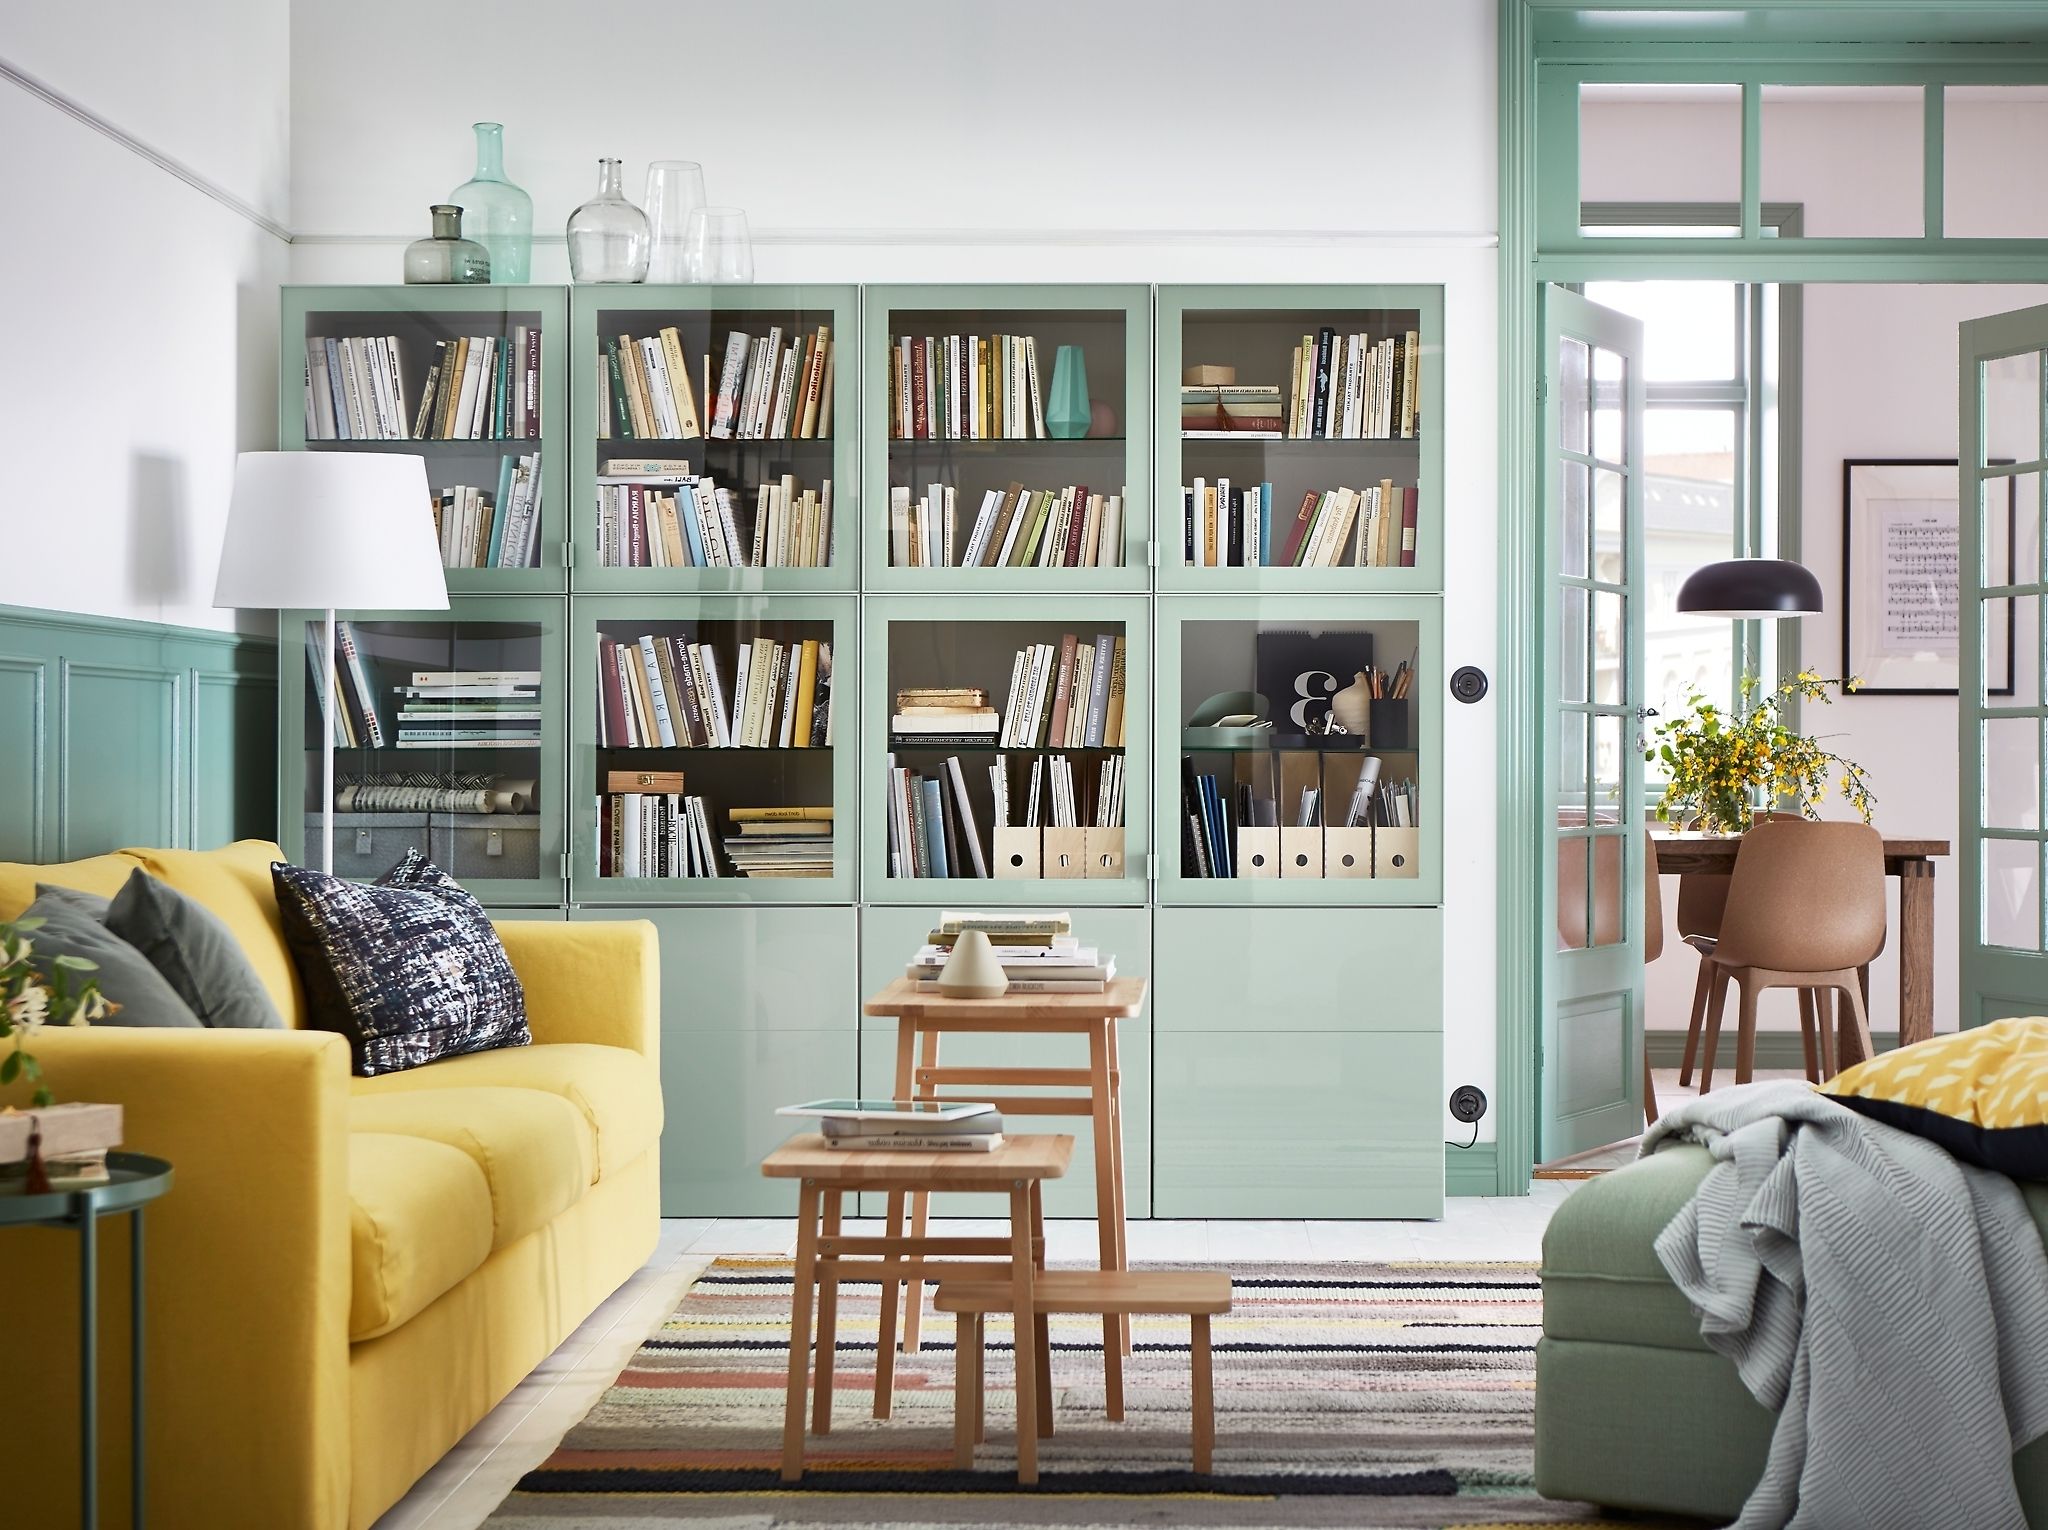 Bookshelf Ideas For Small Living Room - Living Room Bookshelves And Cabinets